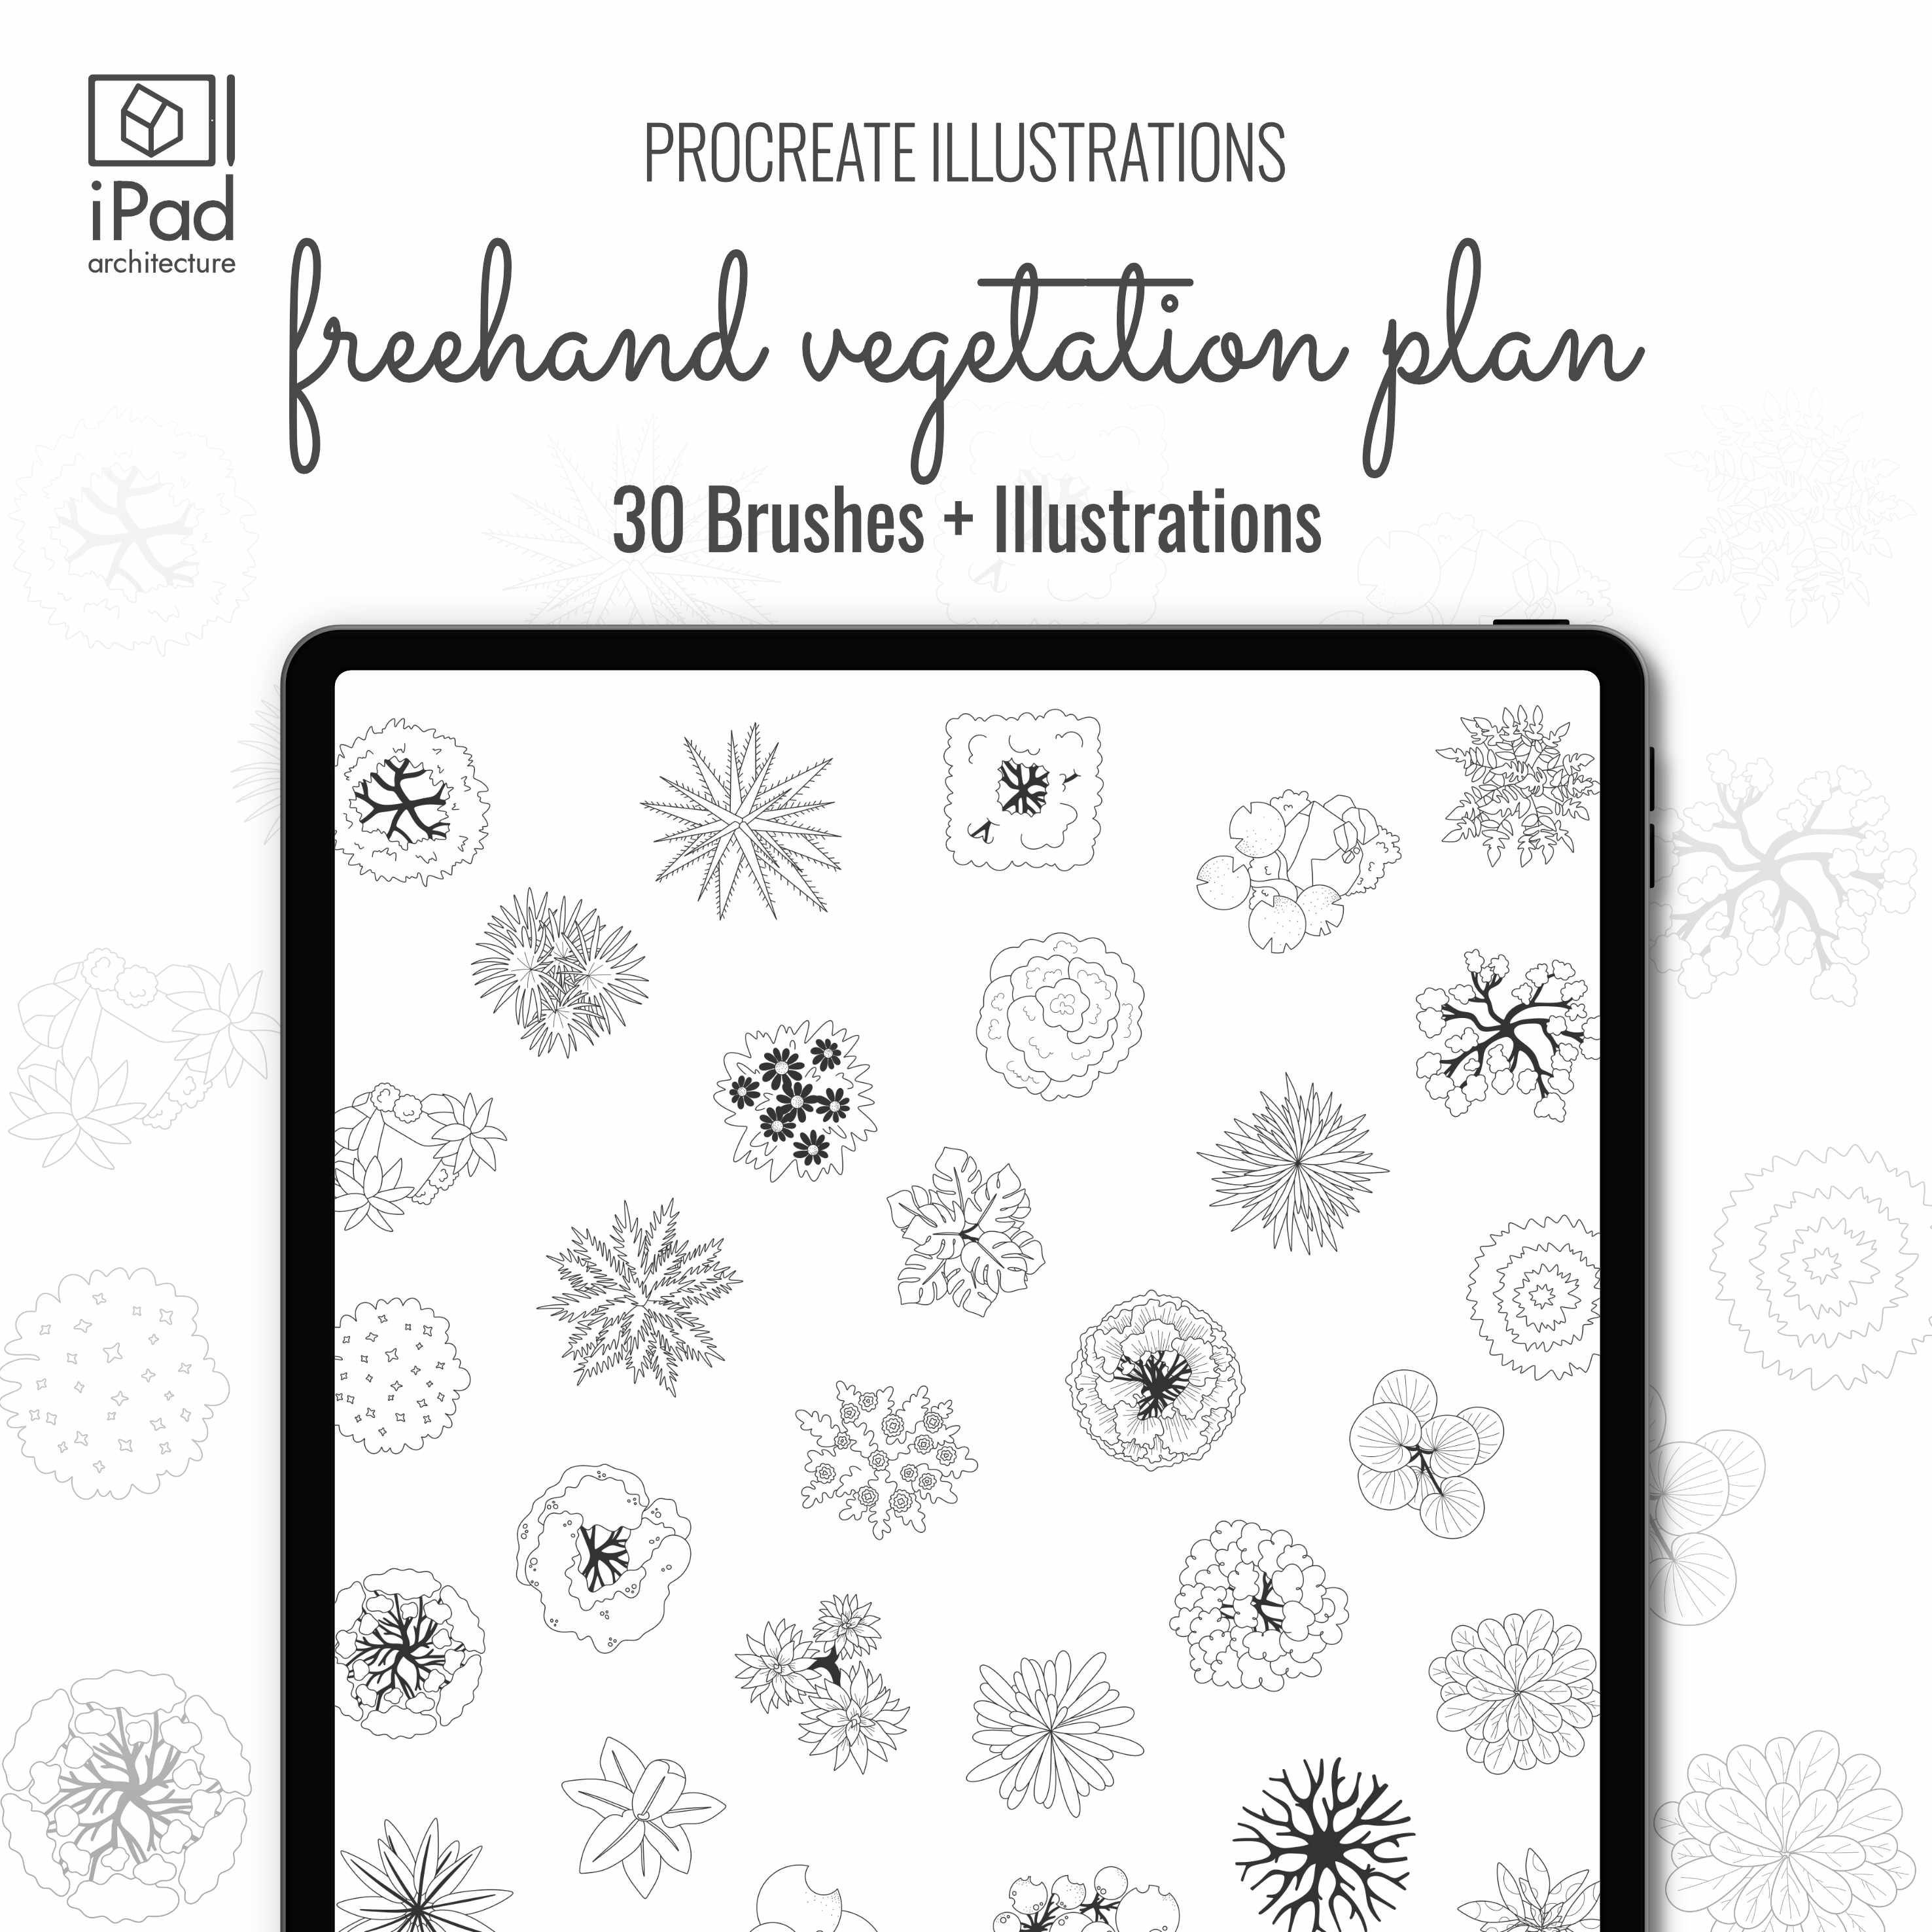 Procreate Freehand Vegetation Plan View Brushset & Illustrations PNG - Toffu Co